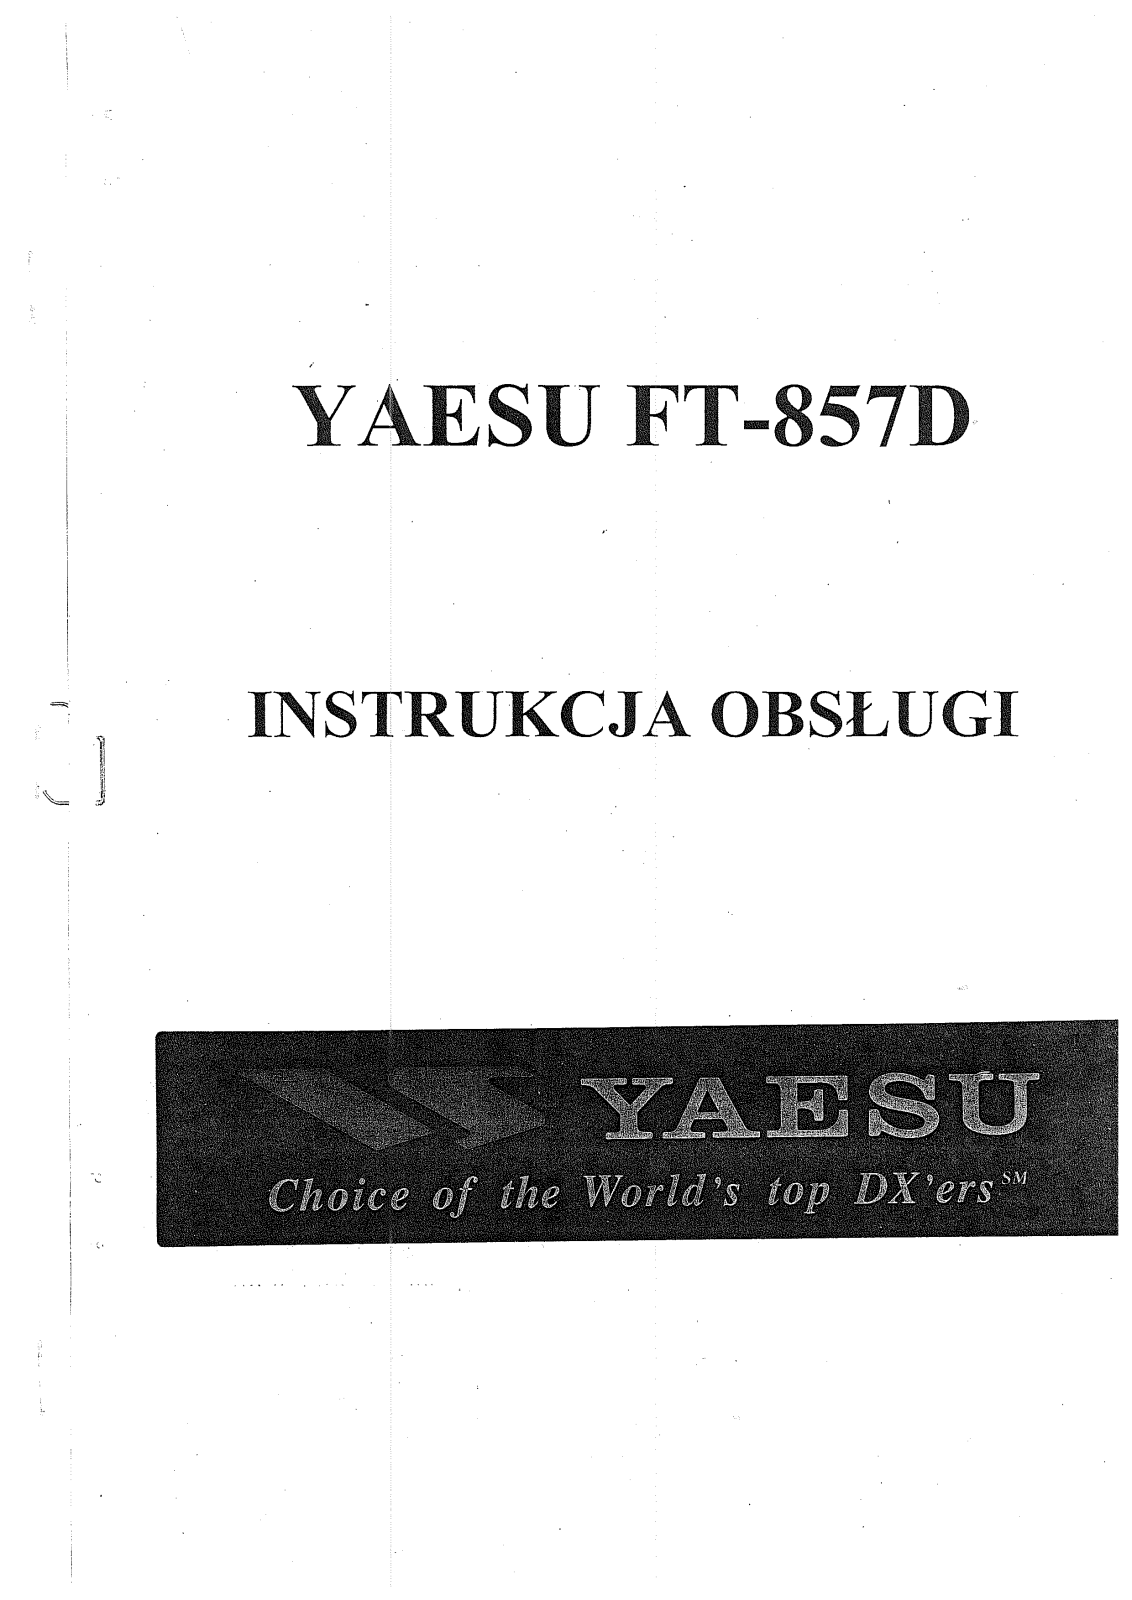 Yaesu FT-857D INSTALLATION INSTRUCTIONS